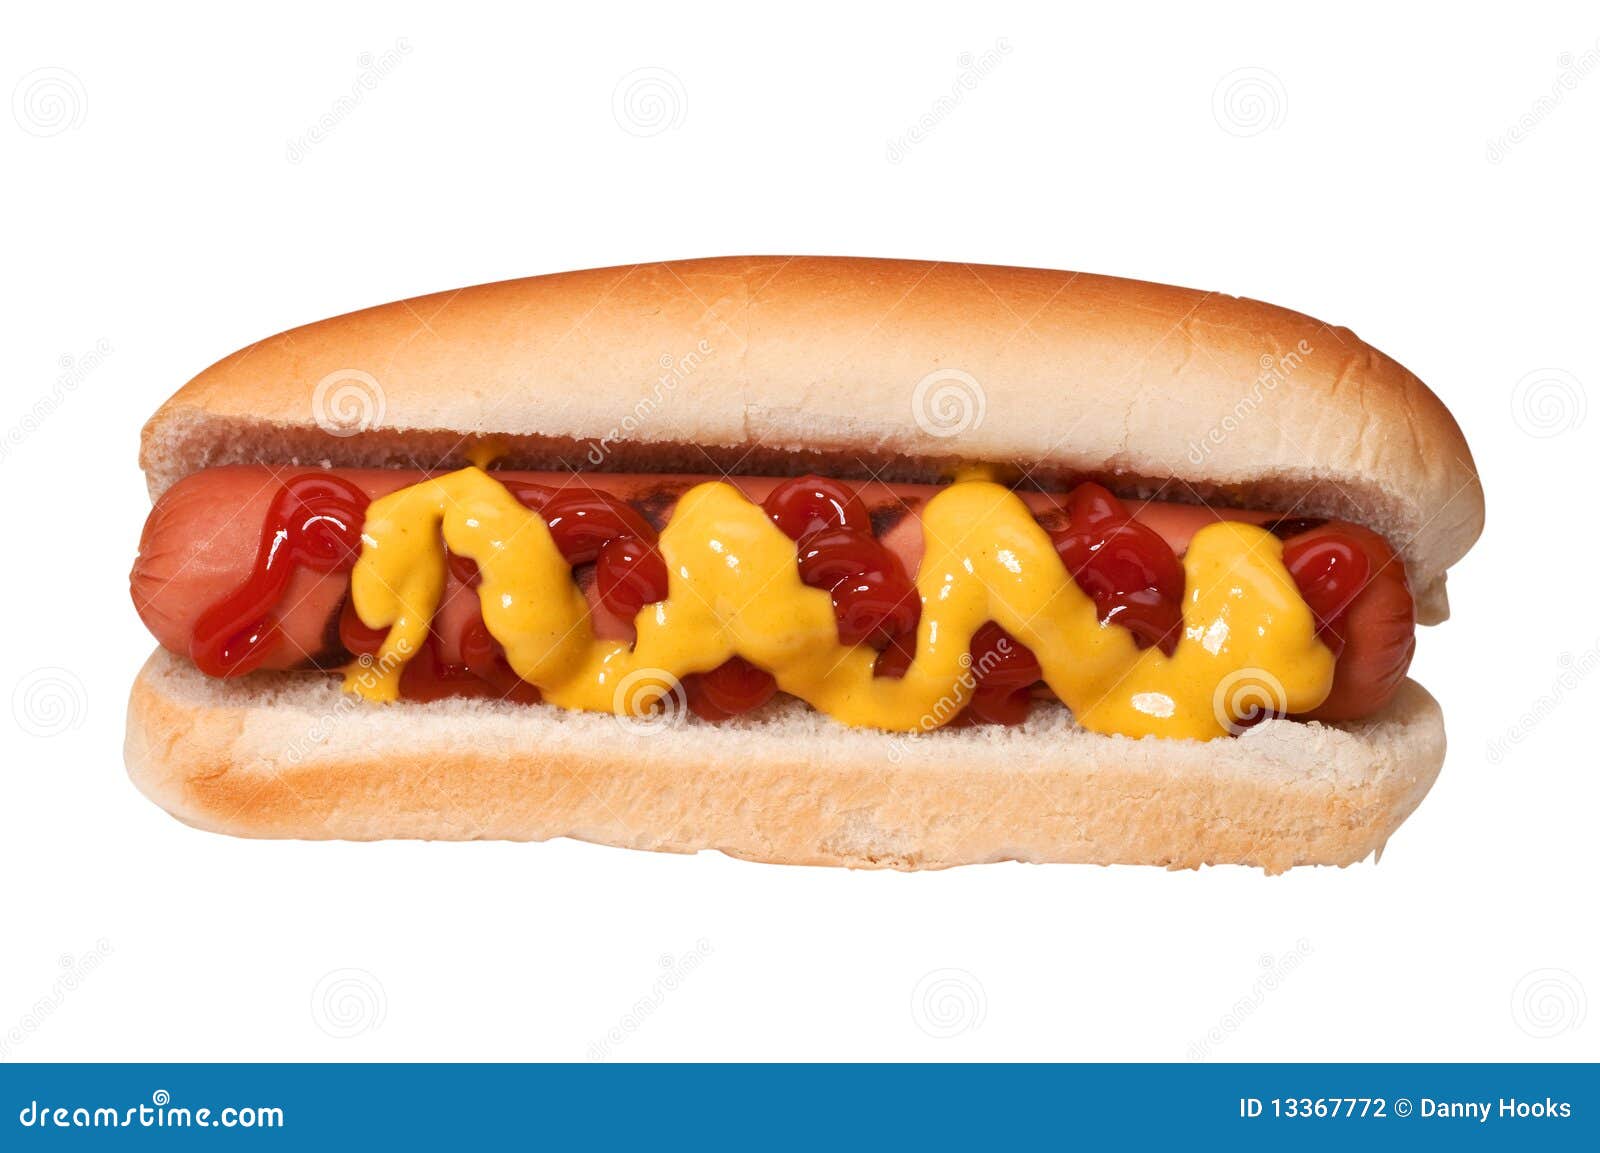 hot-dog-ketchup-mustard-13367772.jpg